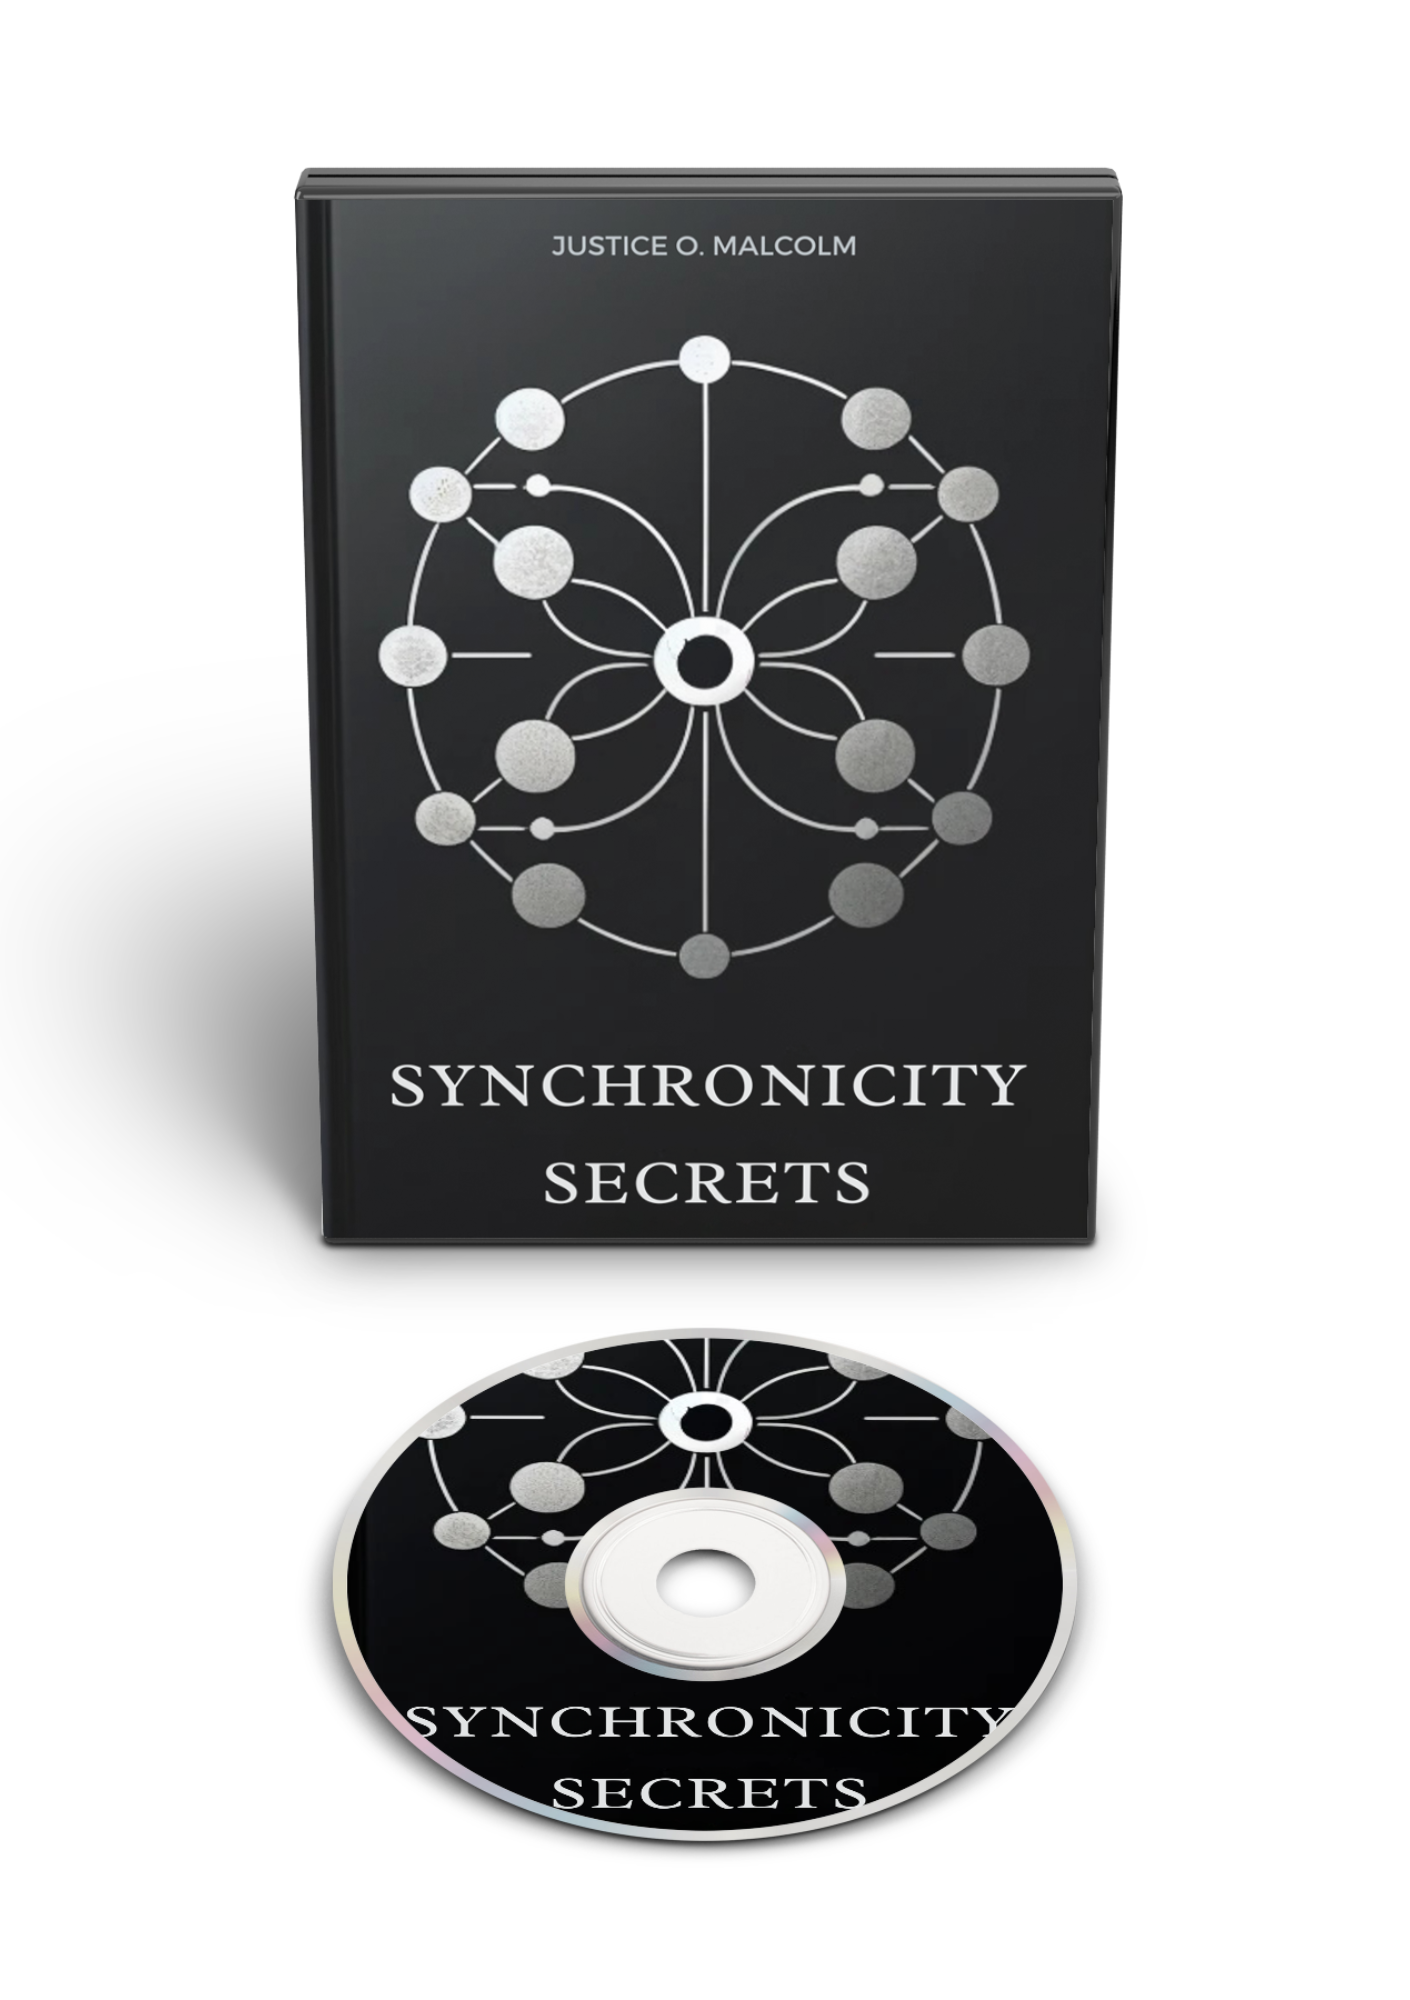 Synchronicity Secrets: The Secret Behind "What You Seek Is Seeking You" (Audiobook)